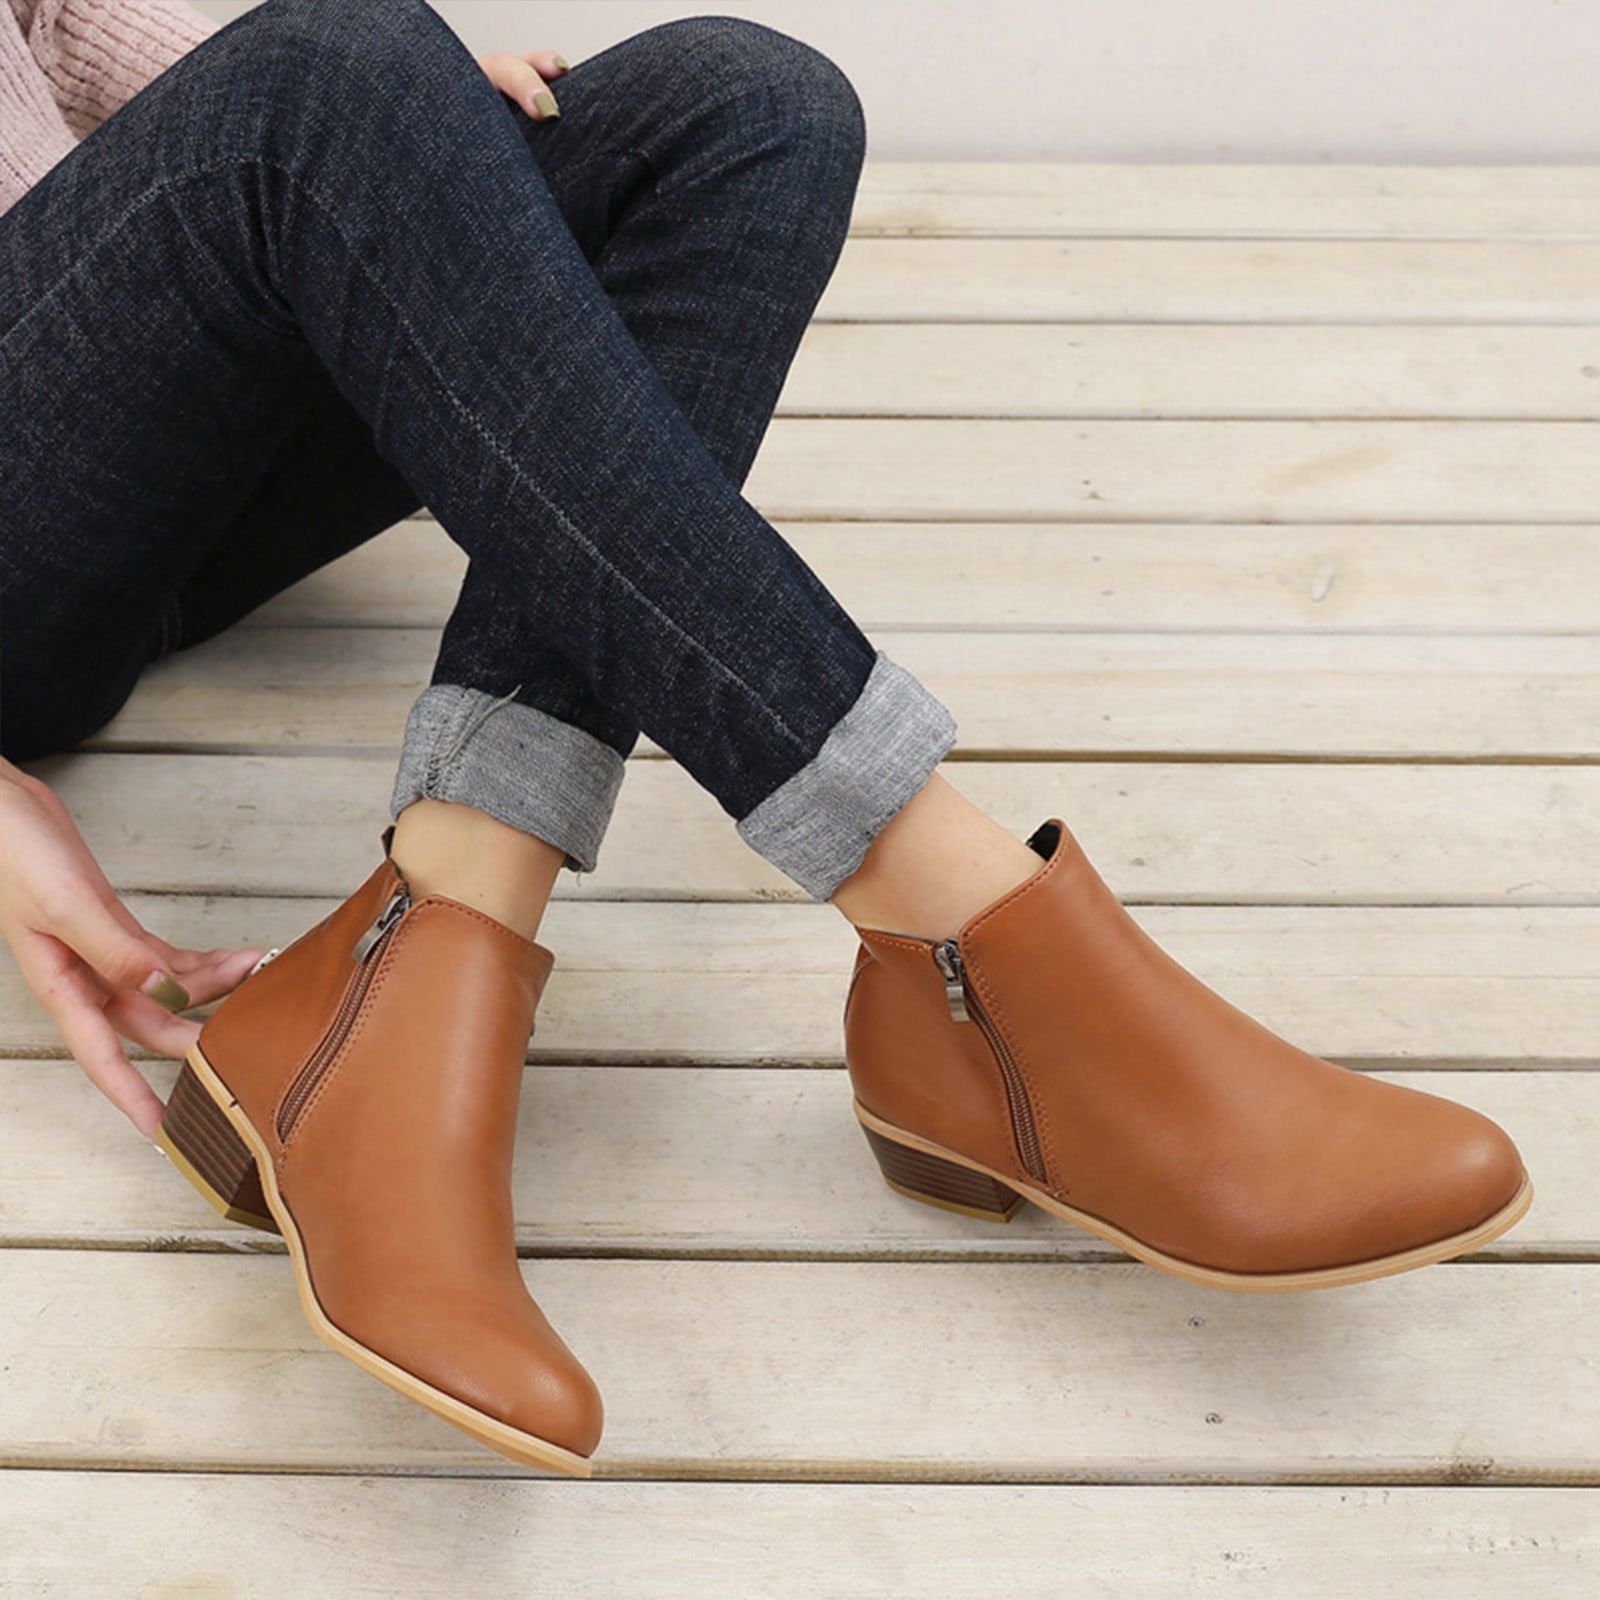 NEXT WOMEN TAN Brown Faux Leather Ankle Boot UK 4 EU 37 Zip Cone High Heel  Shoes £26.99 - PicClick UK